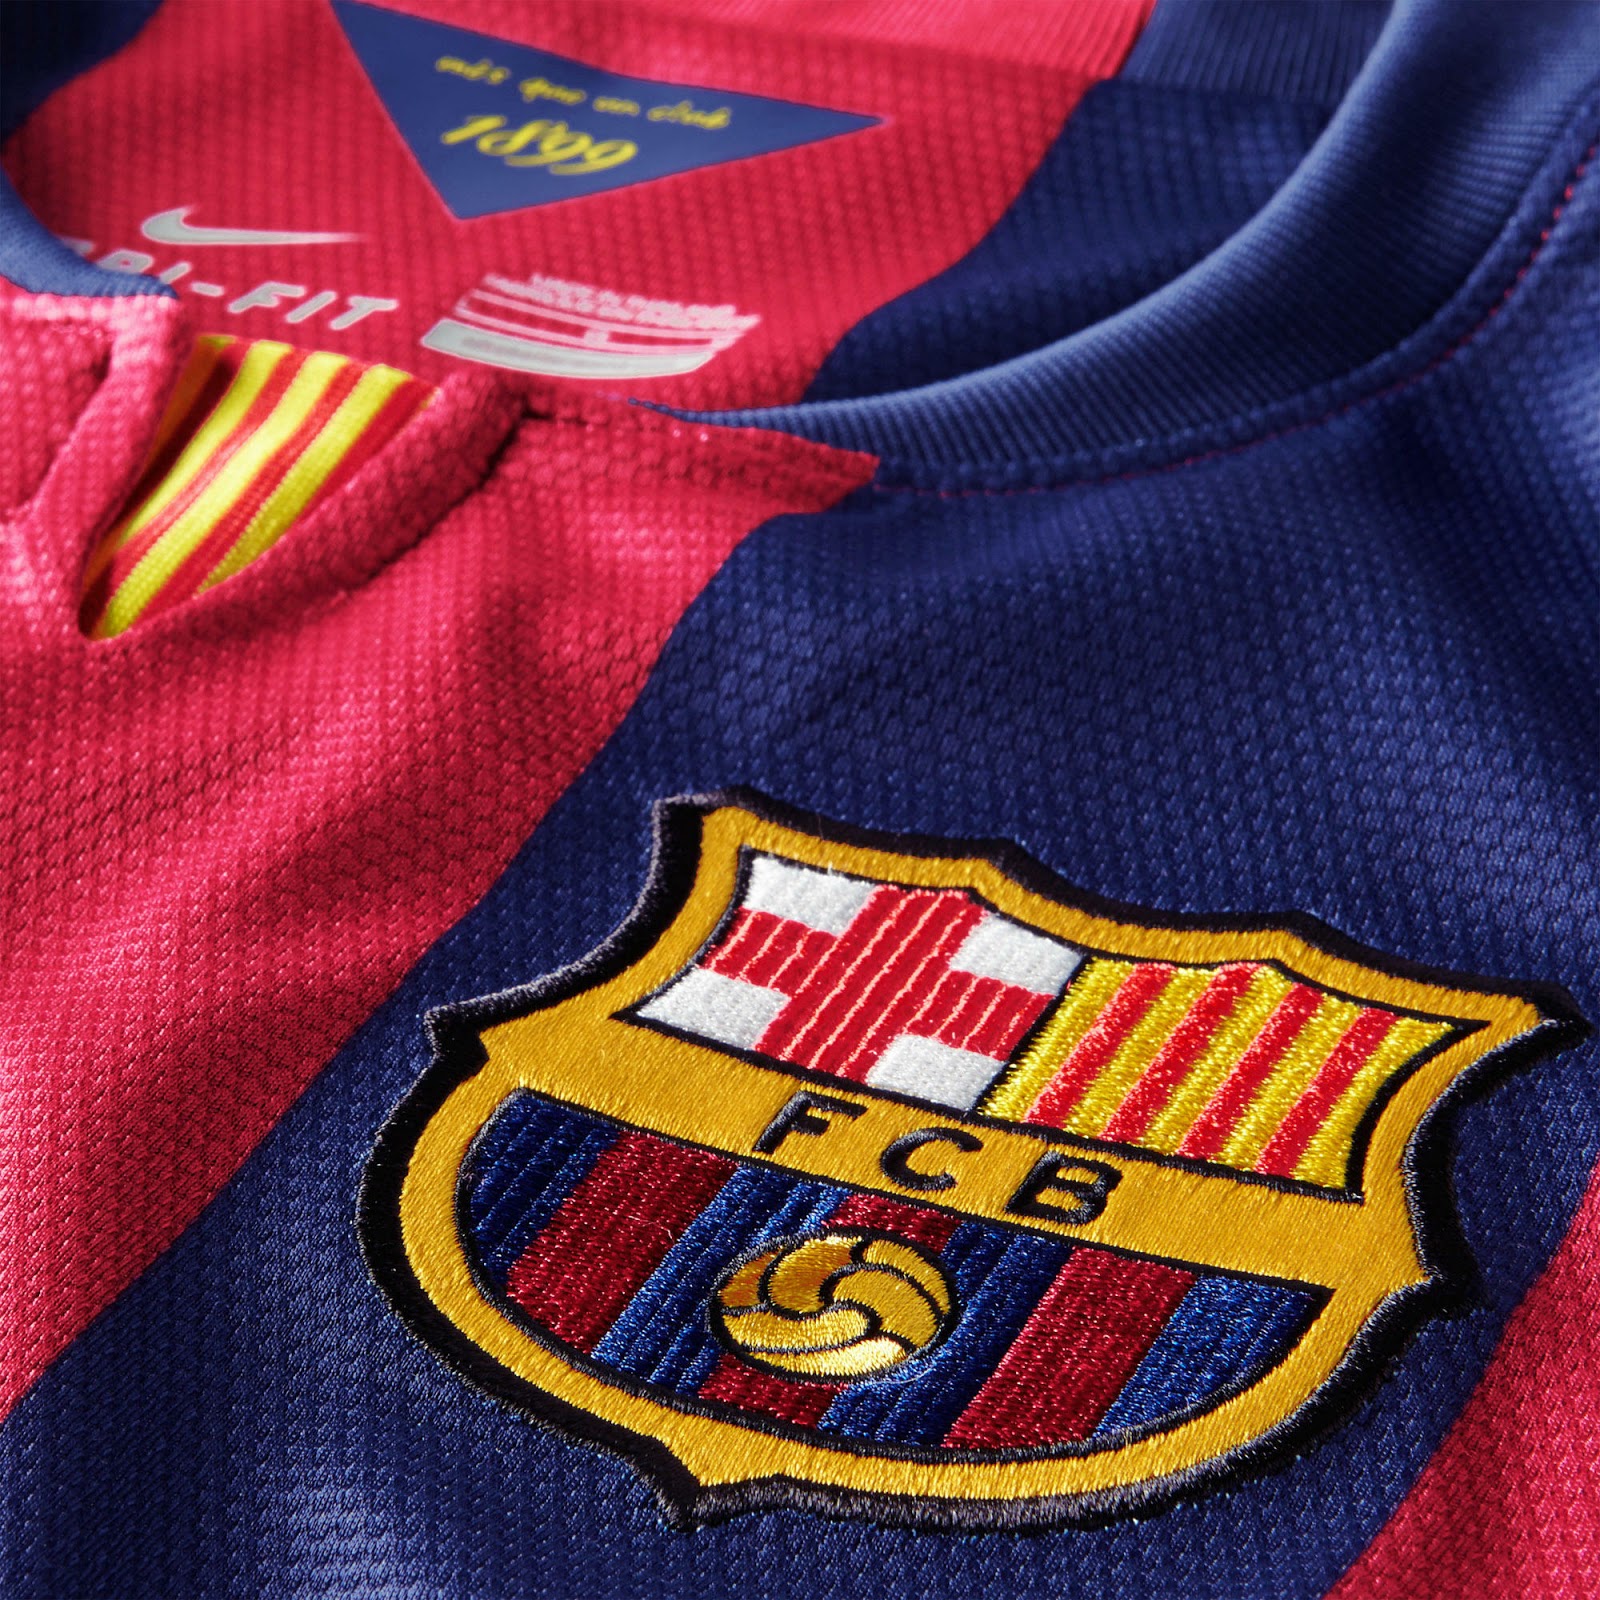 FC Barcelona 14 15 (2014 15) Home, Away and Third Kits   Footy    fc barcelona kit 2014/15